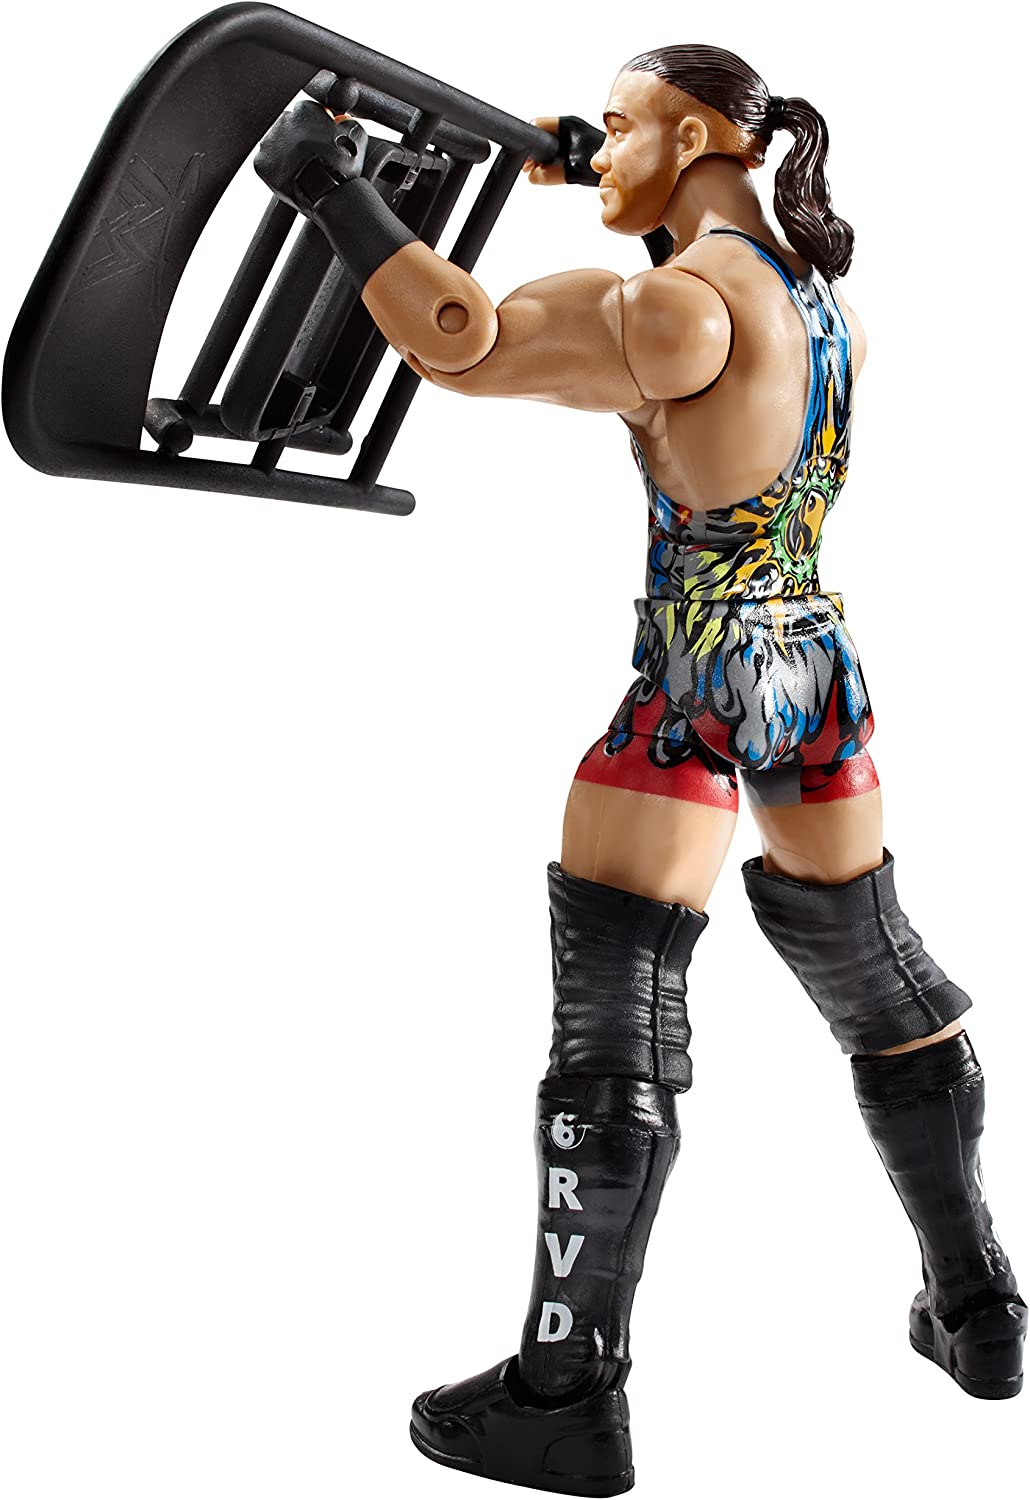 2014 WWE Mattel Elite Collection Series 27 Rob Van Dam